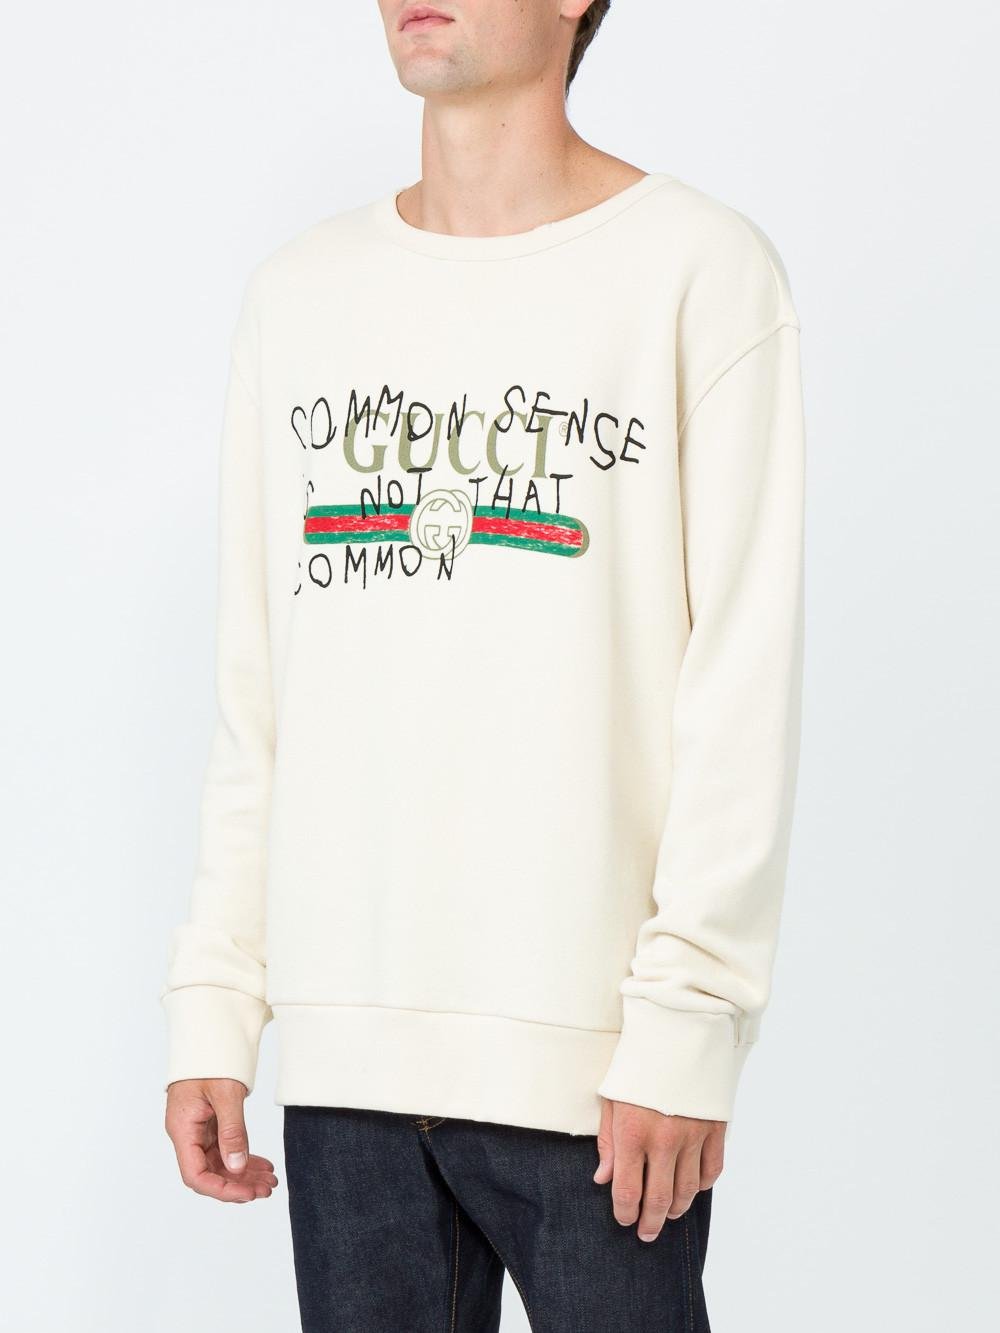 Gucci Sweatshirt Common Sense Is Not That Common on Sale, SAVE 49% -  mpgc.net